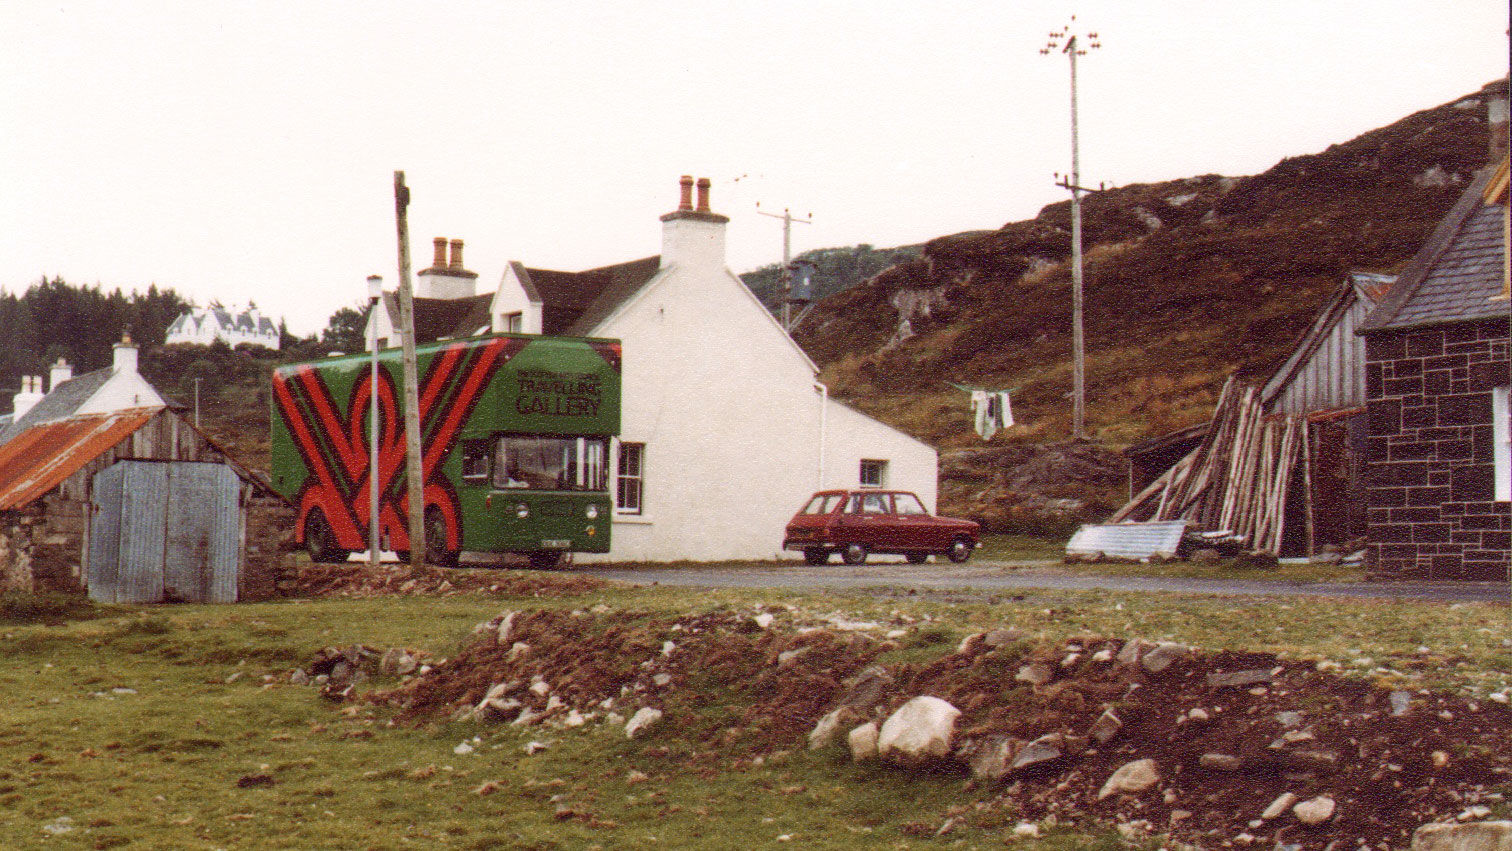 Travelling Gallery vehicle on Scottish Island